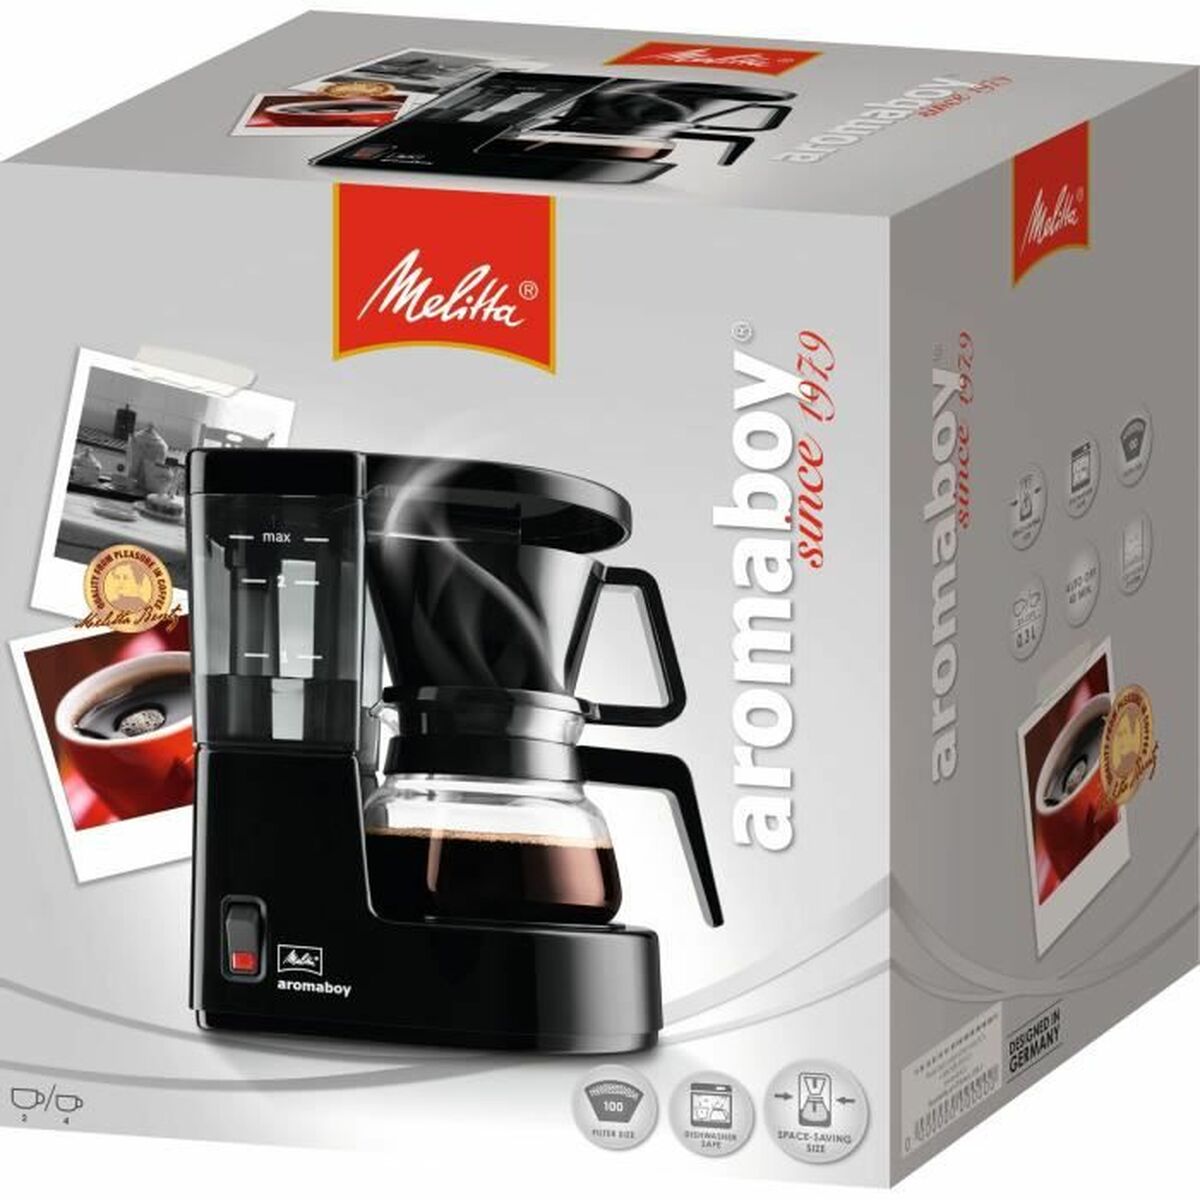 Filterkaffeemaschine Melitta Aromaboy 500 W Schwarz 500 W - CA International  